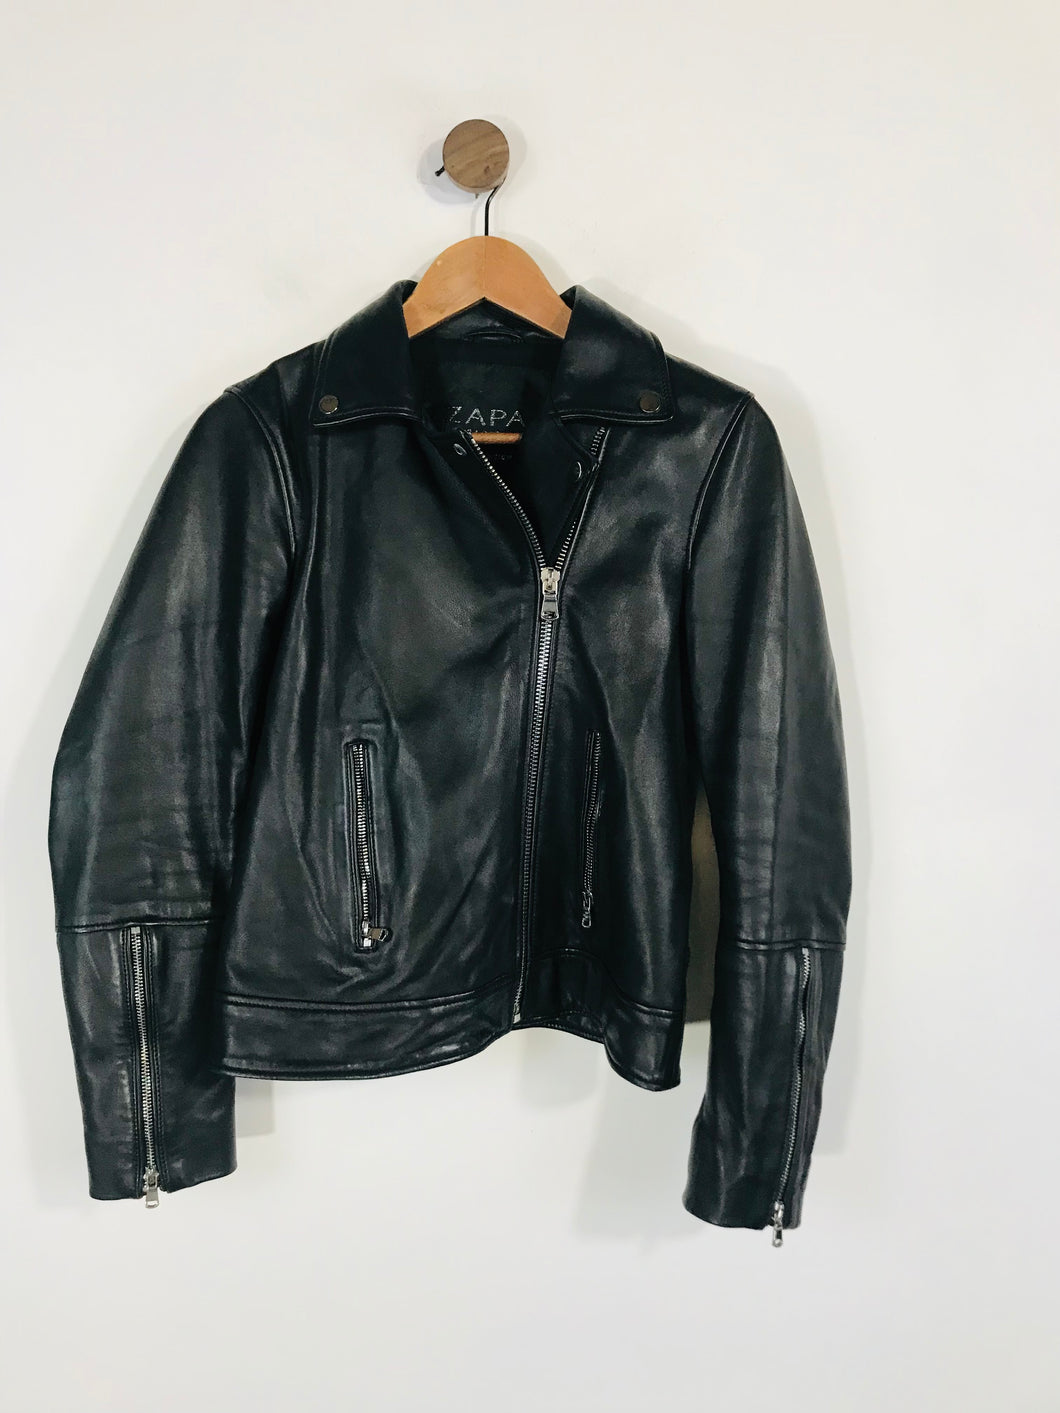 Zapa Paris Women's Leather Biker Jacket | EU38 UK10 | Black